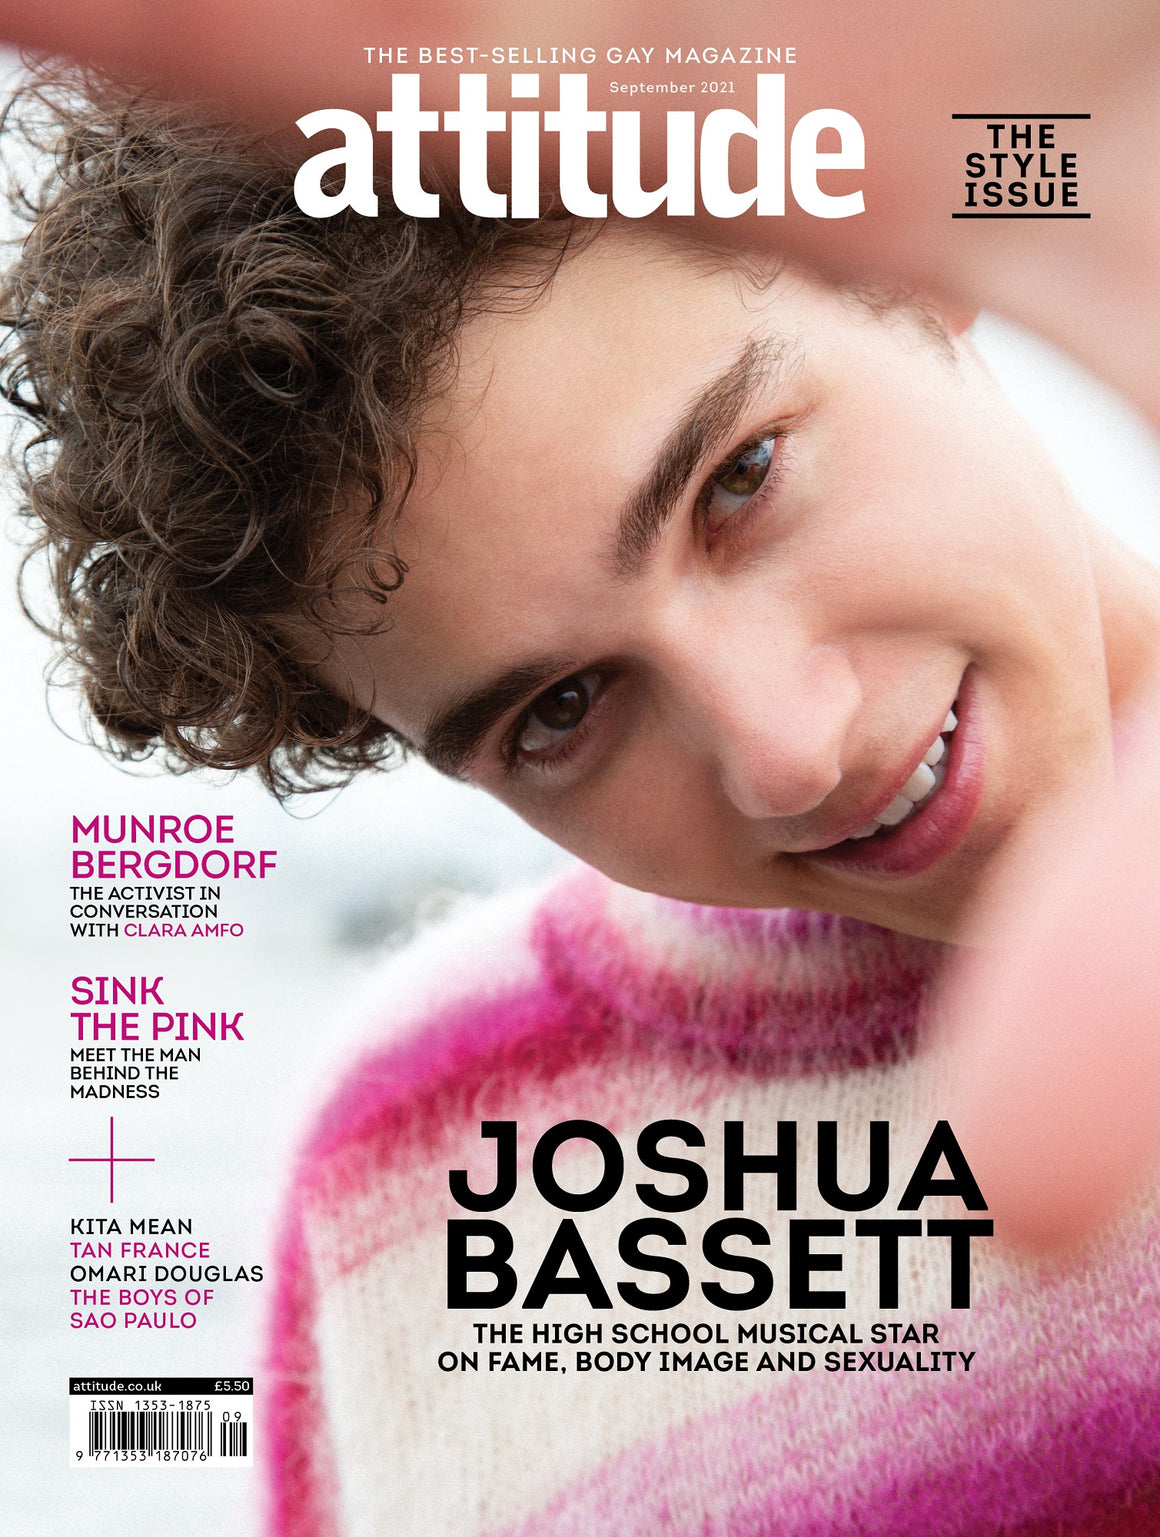 UK Attitude Magazine September 2021: JOSHUA BASSETT COVER FEATURE